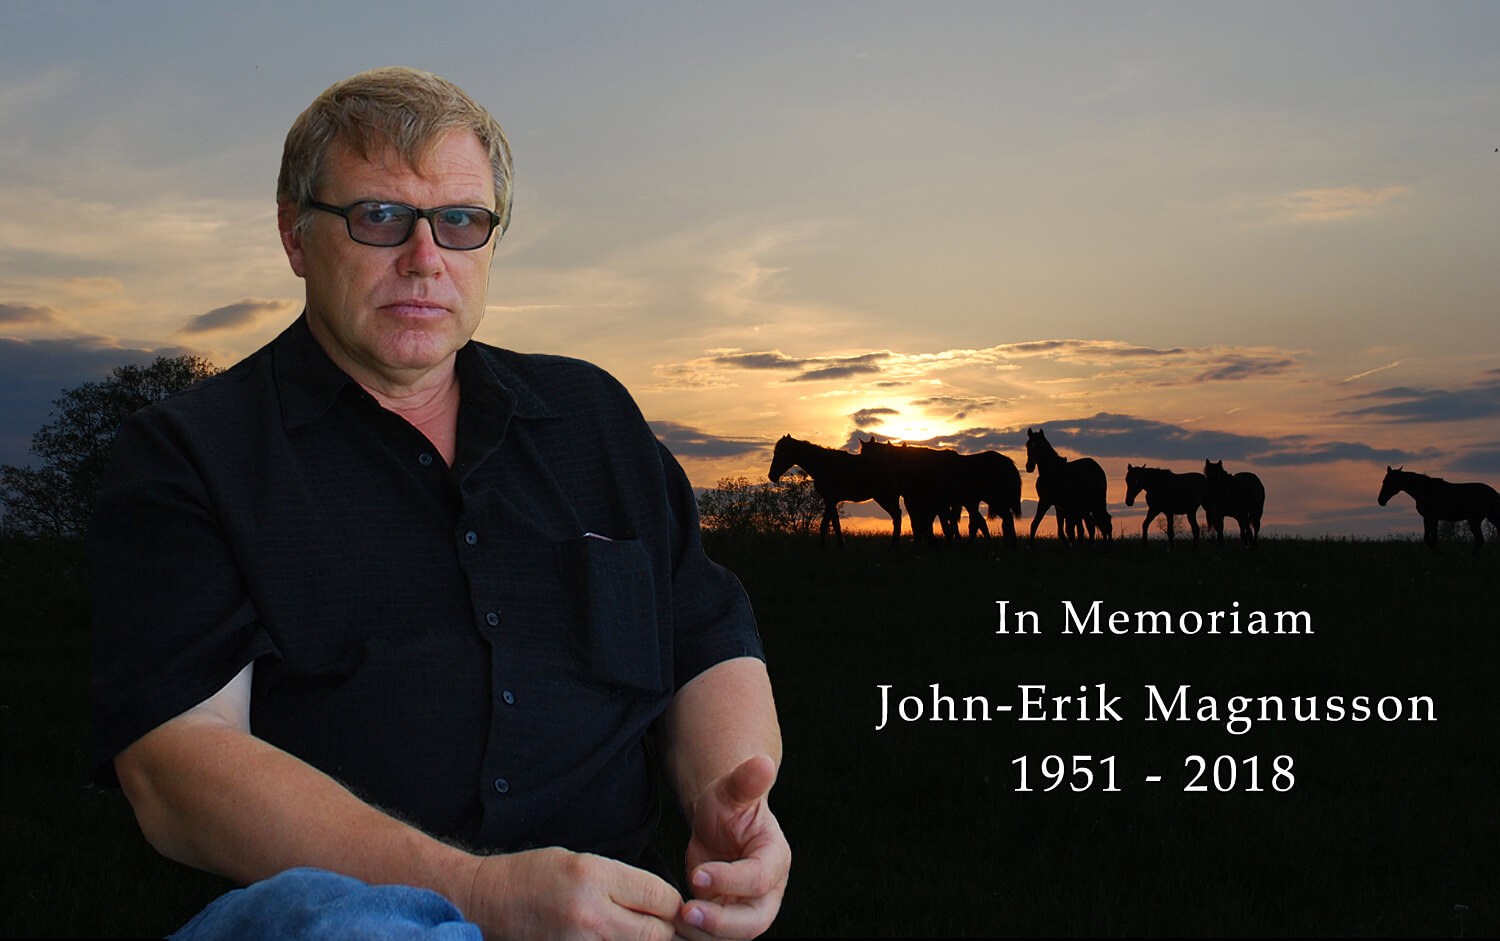 In Memoriam of John-Erik Magnusson